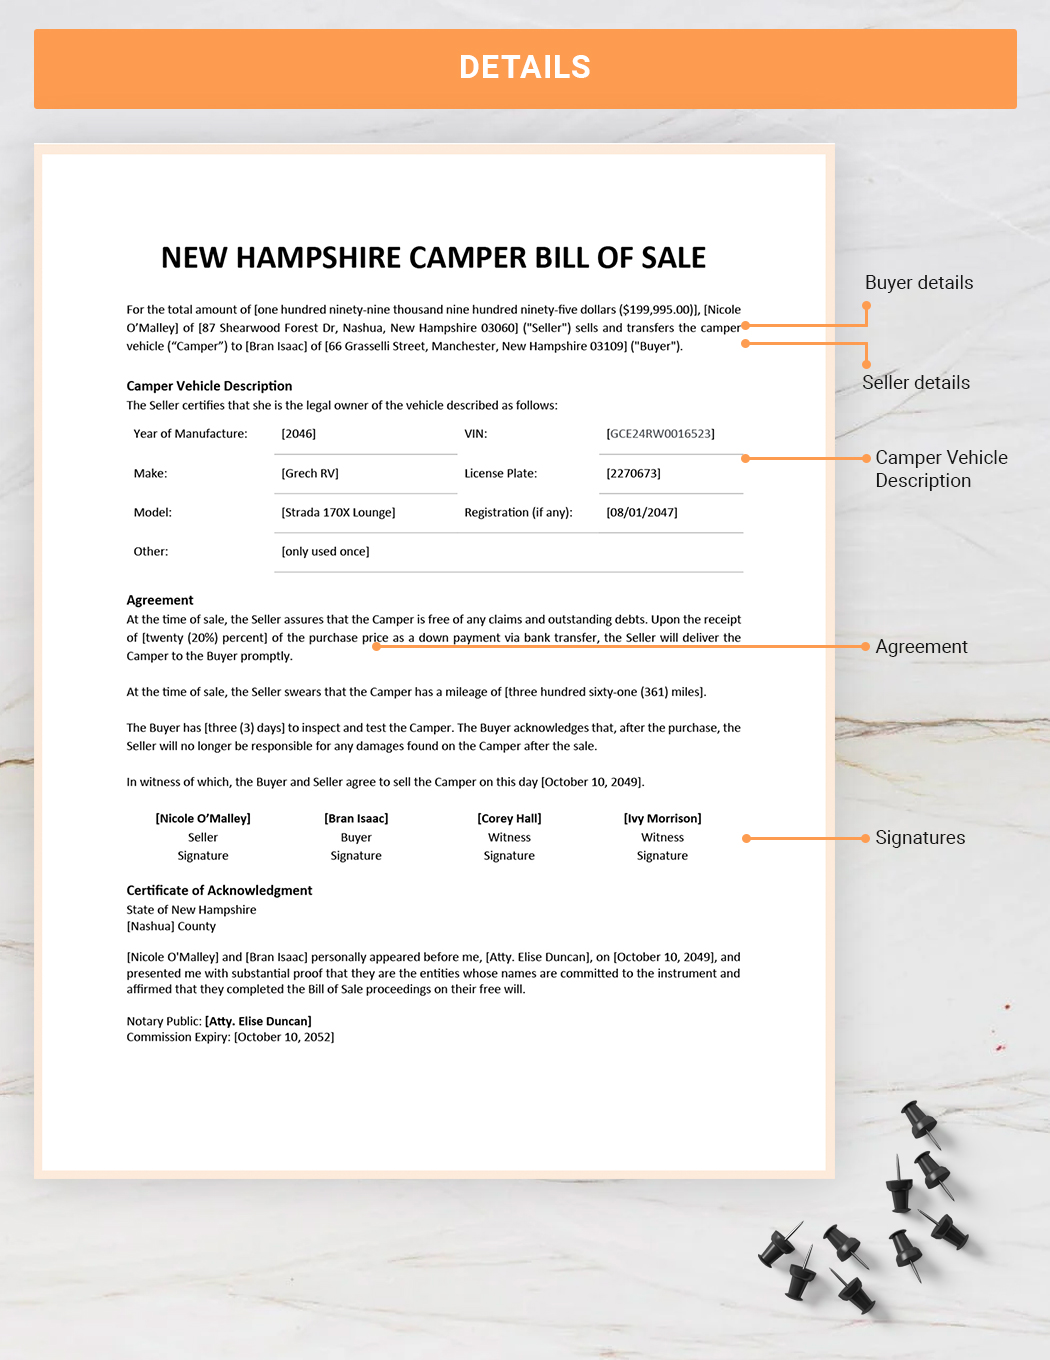 New Hampshire Camper Bill of Sale Template